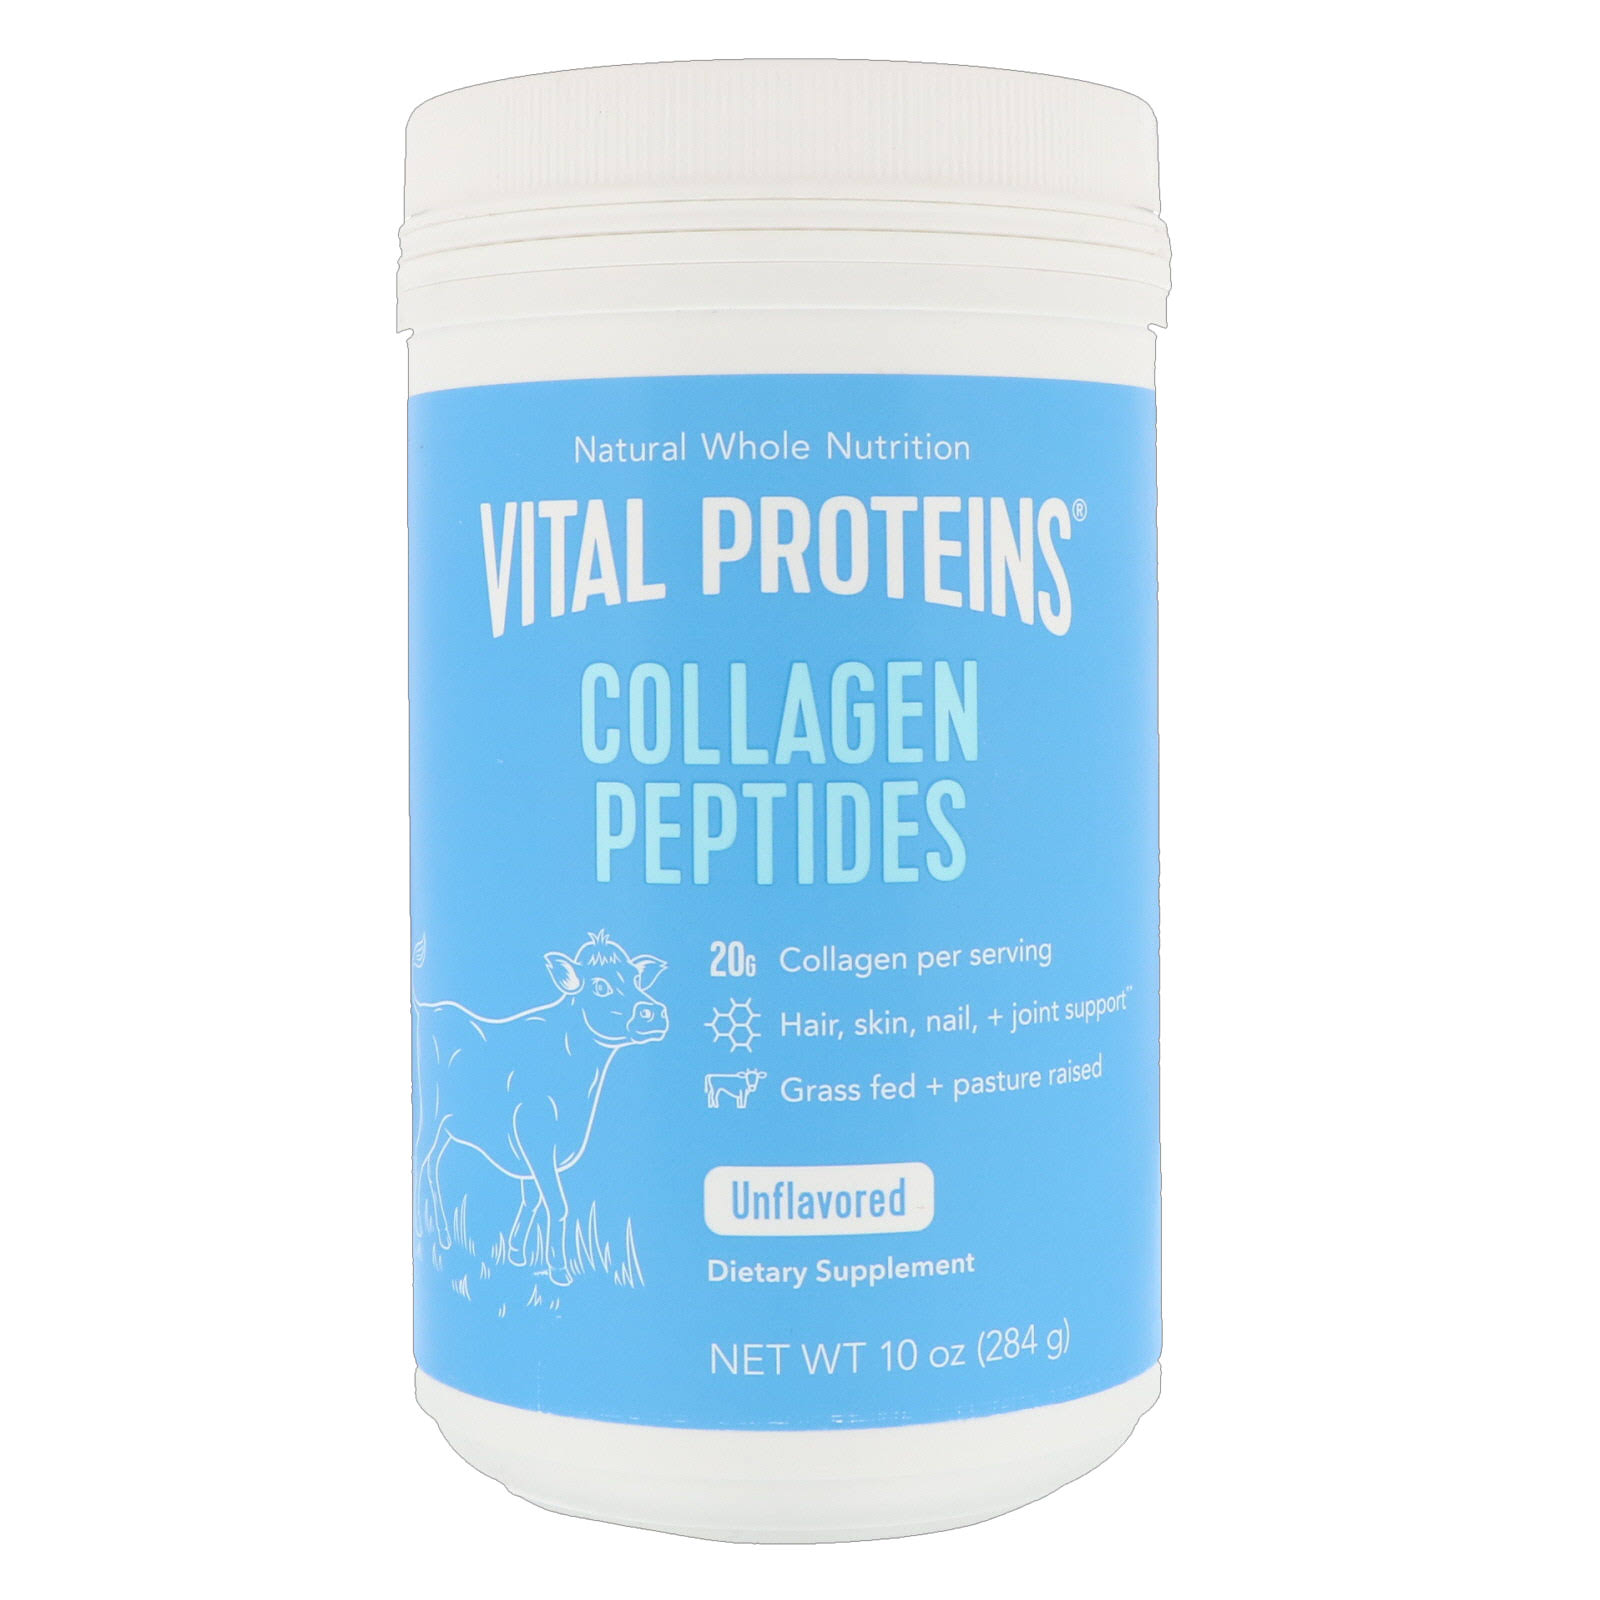 Vital Proteins Collagen Peptides Dietary Supplement - 284g